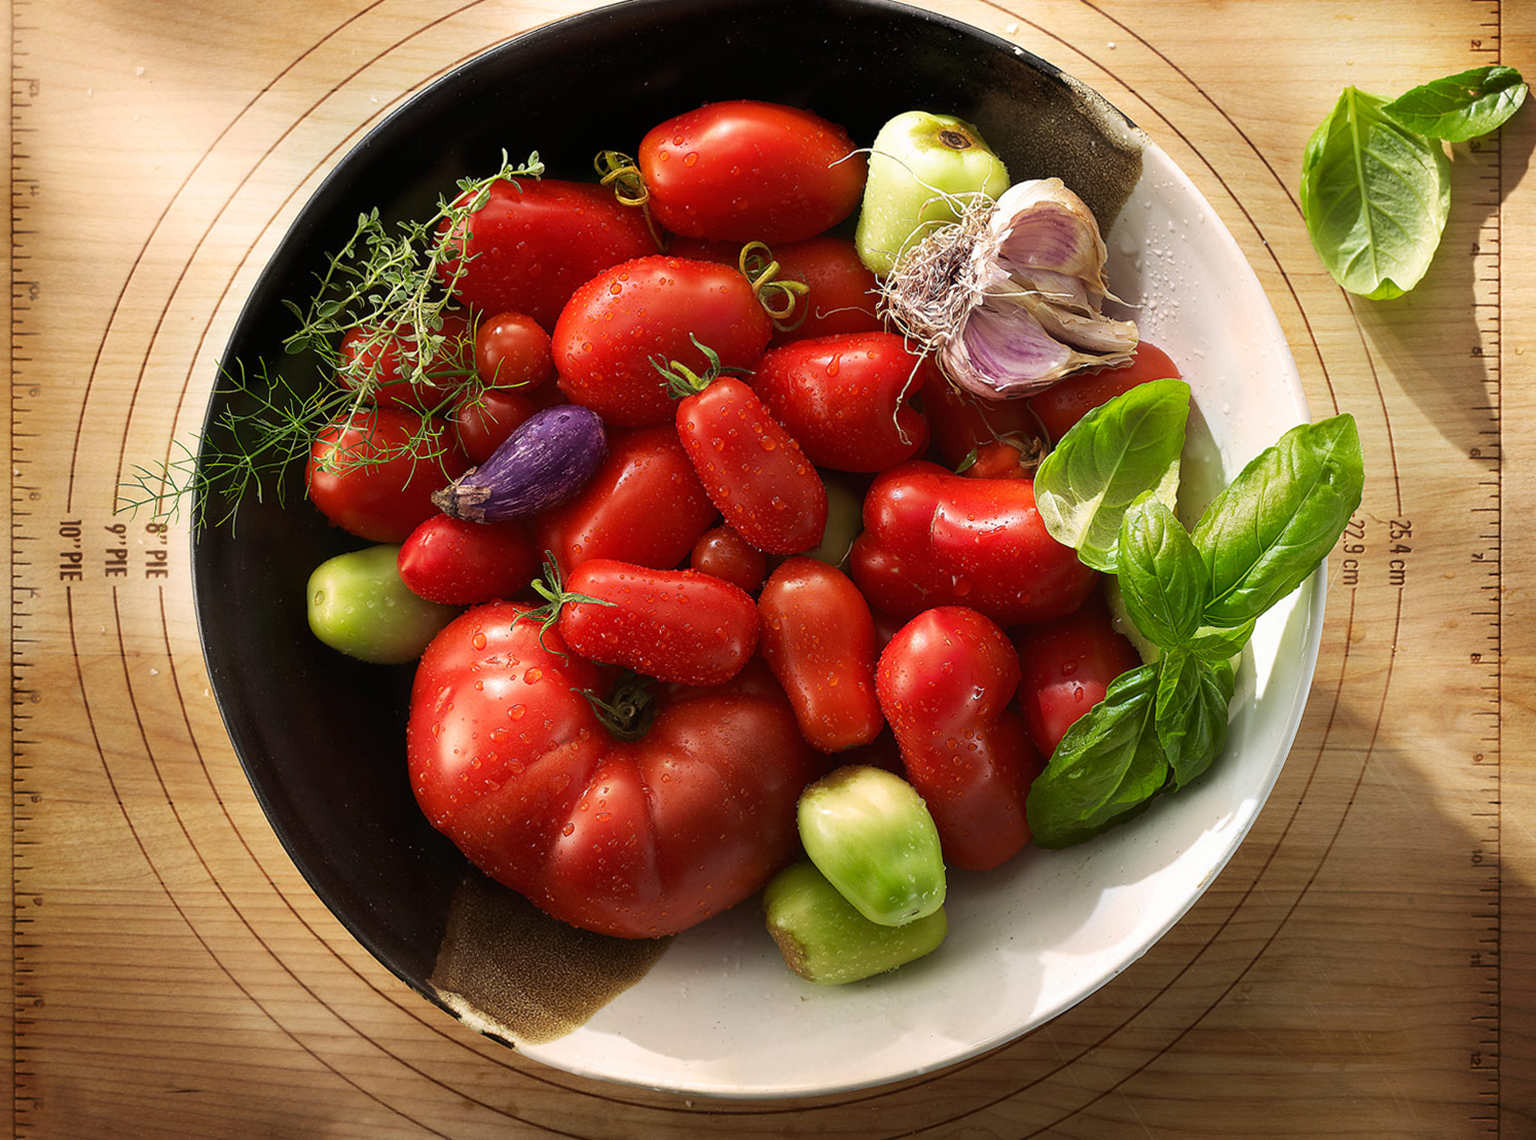 Tomatoes-in-Bowlcopy